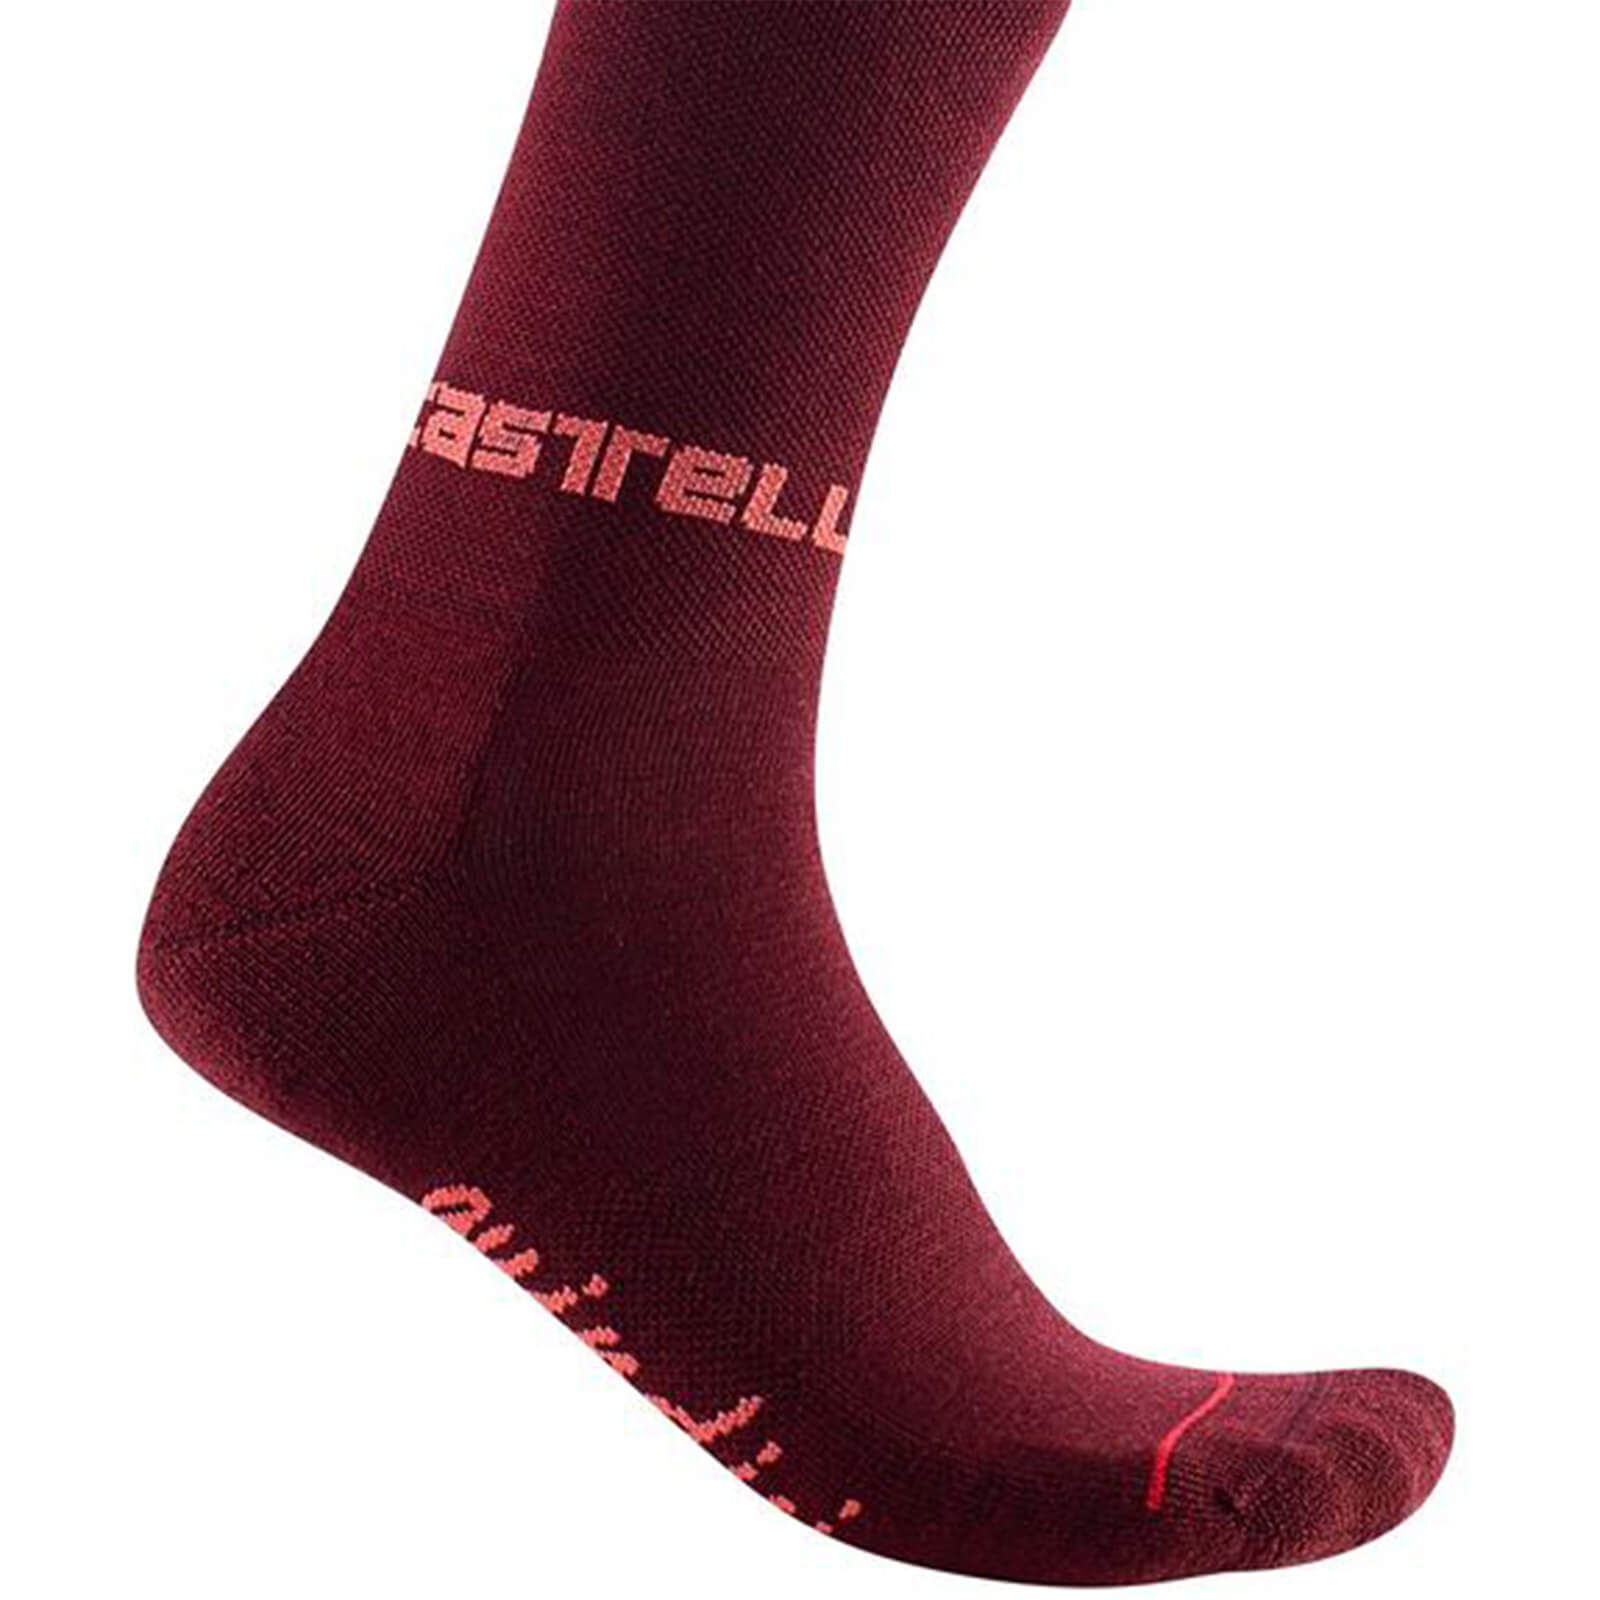 Castelli Women's Quindici Soft Merino Socks - S/M - Bordeaux